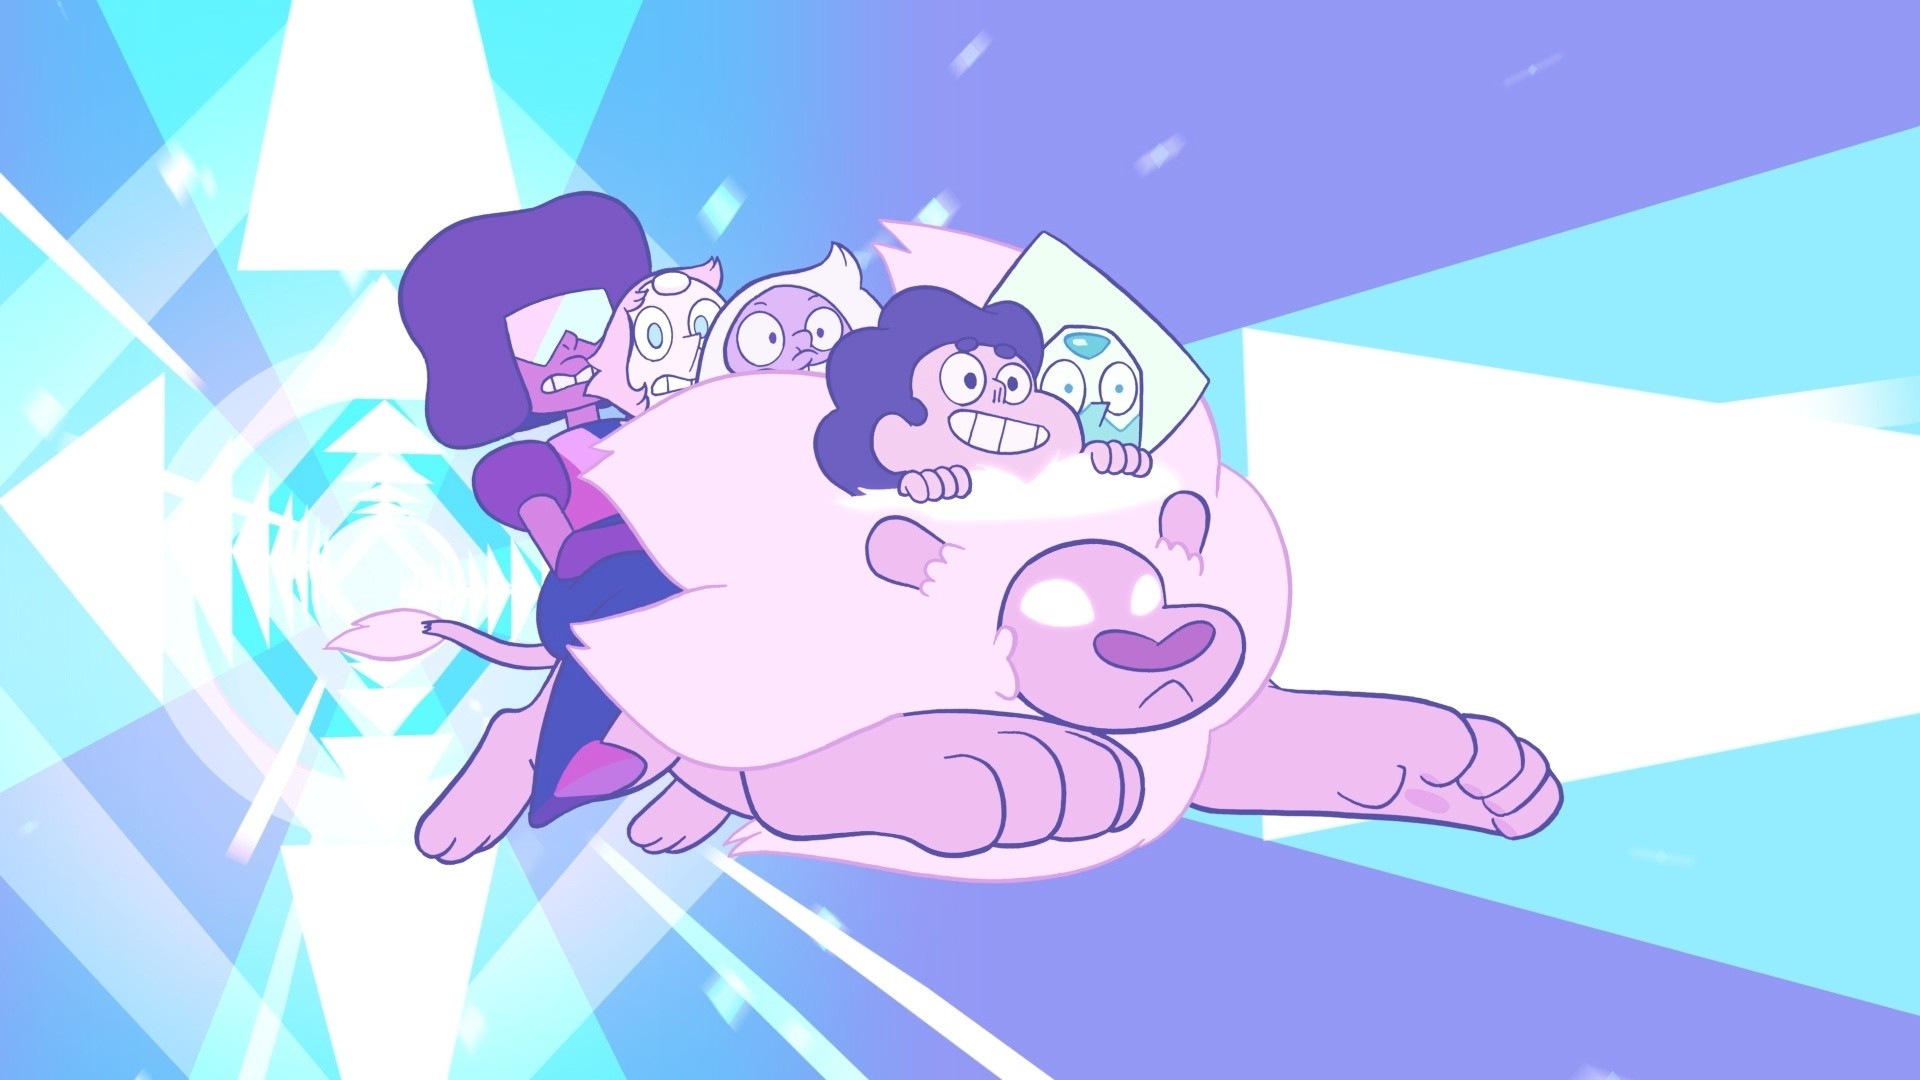 Cartoon Network estreia “Steven Universo Futuro”